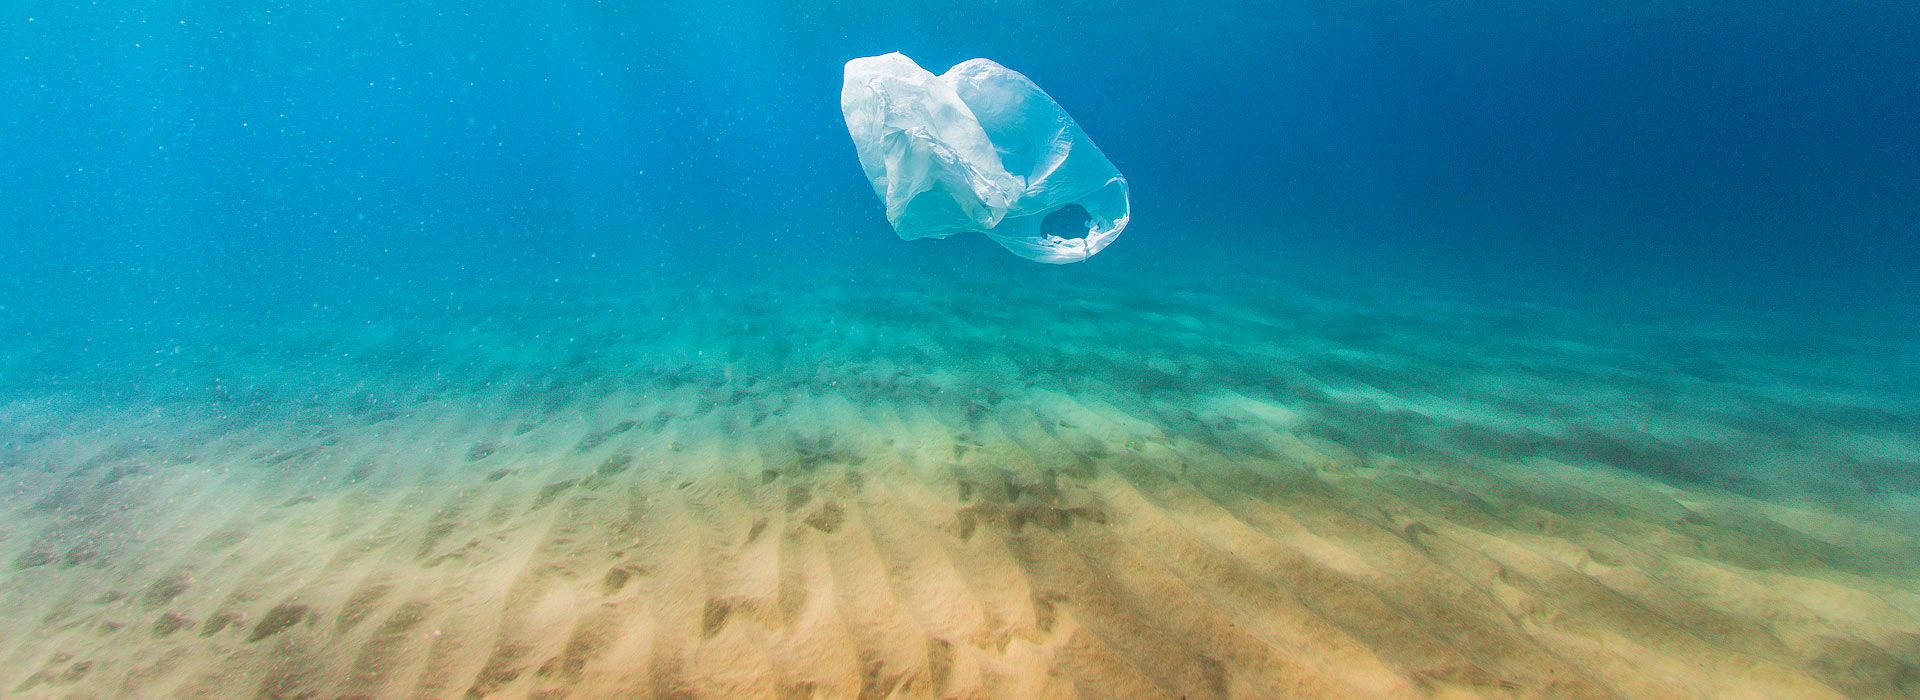 Plastic bag pollution in ocean - Credit: iStock.com/lindsay_imagery